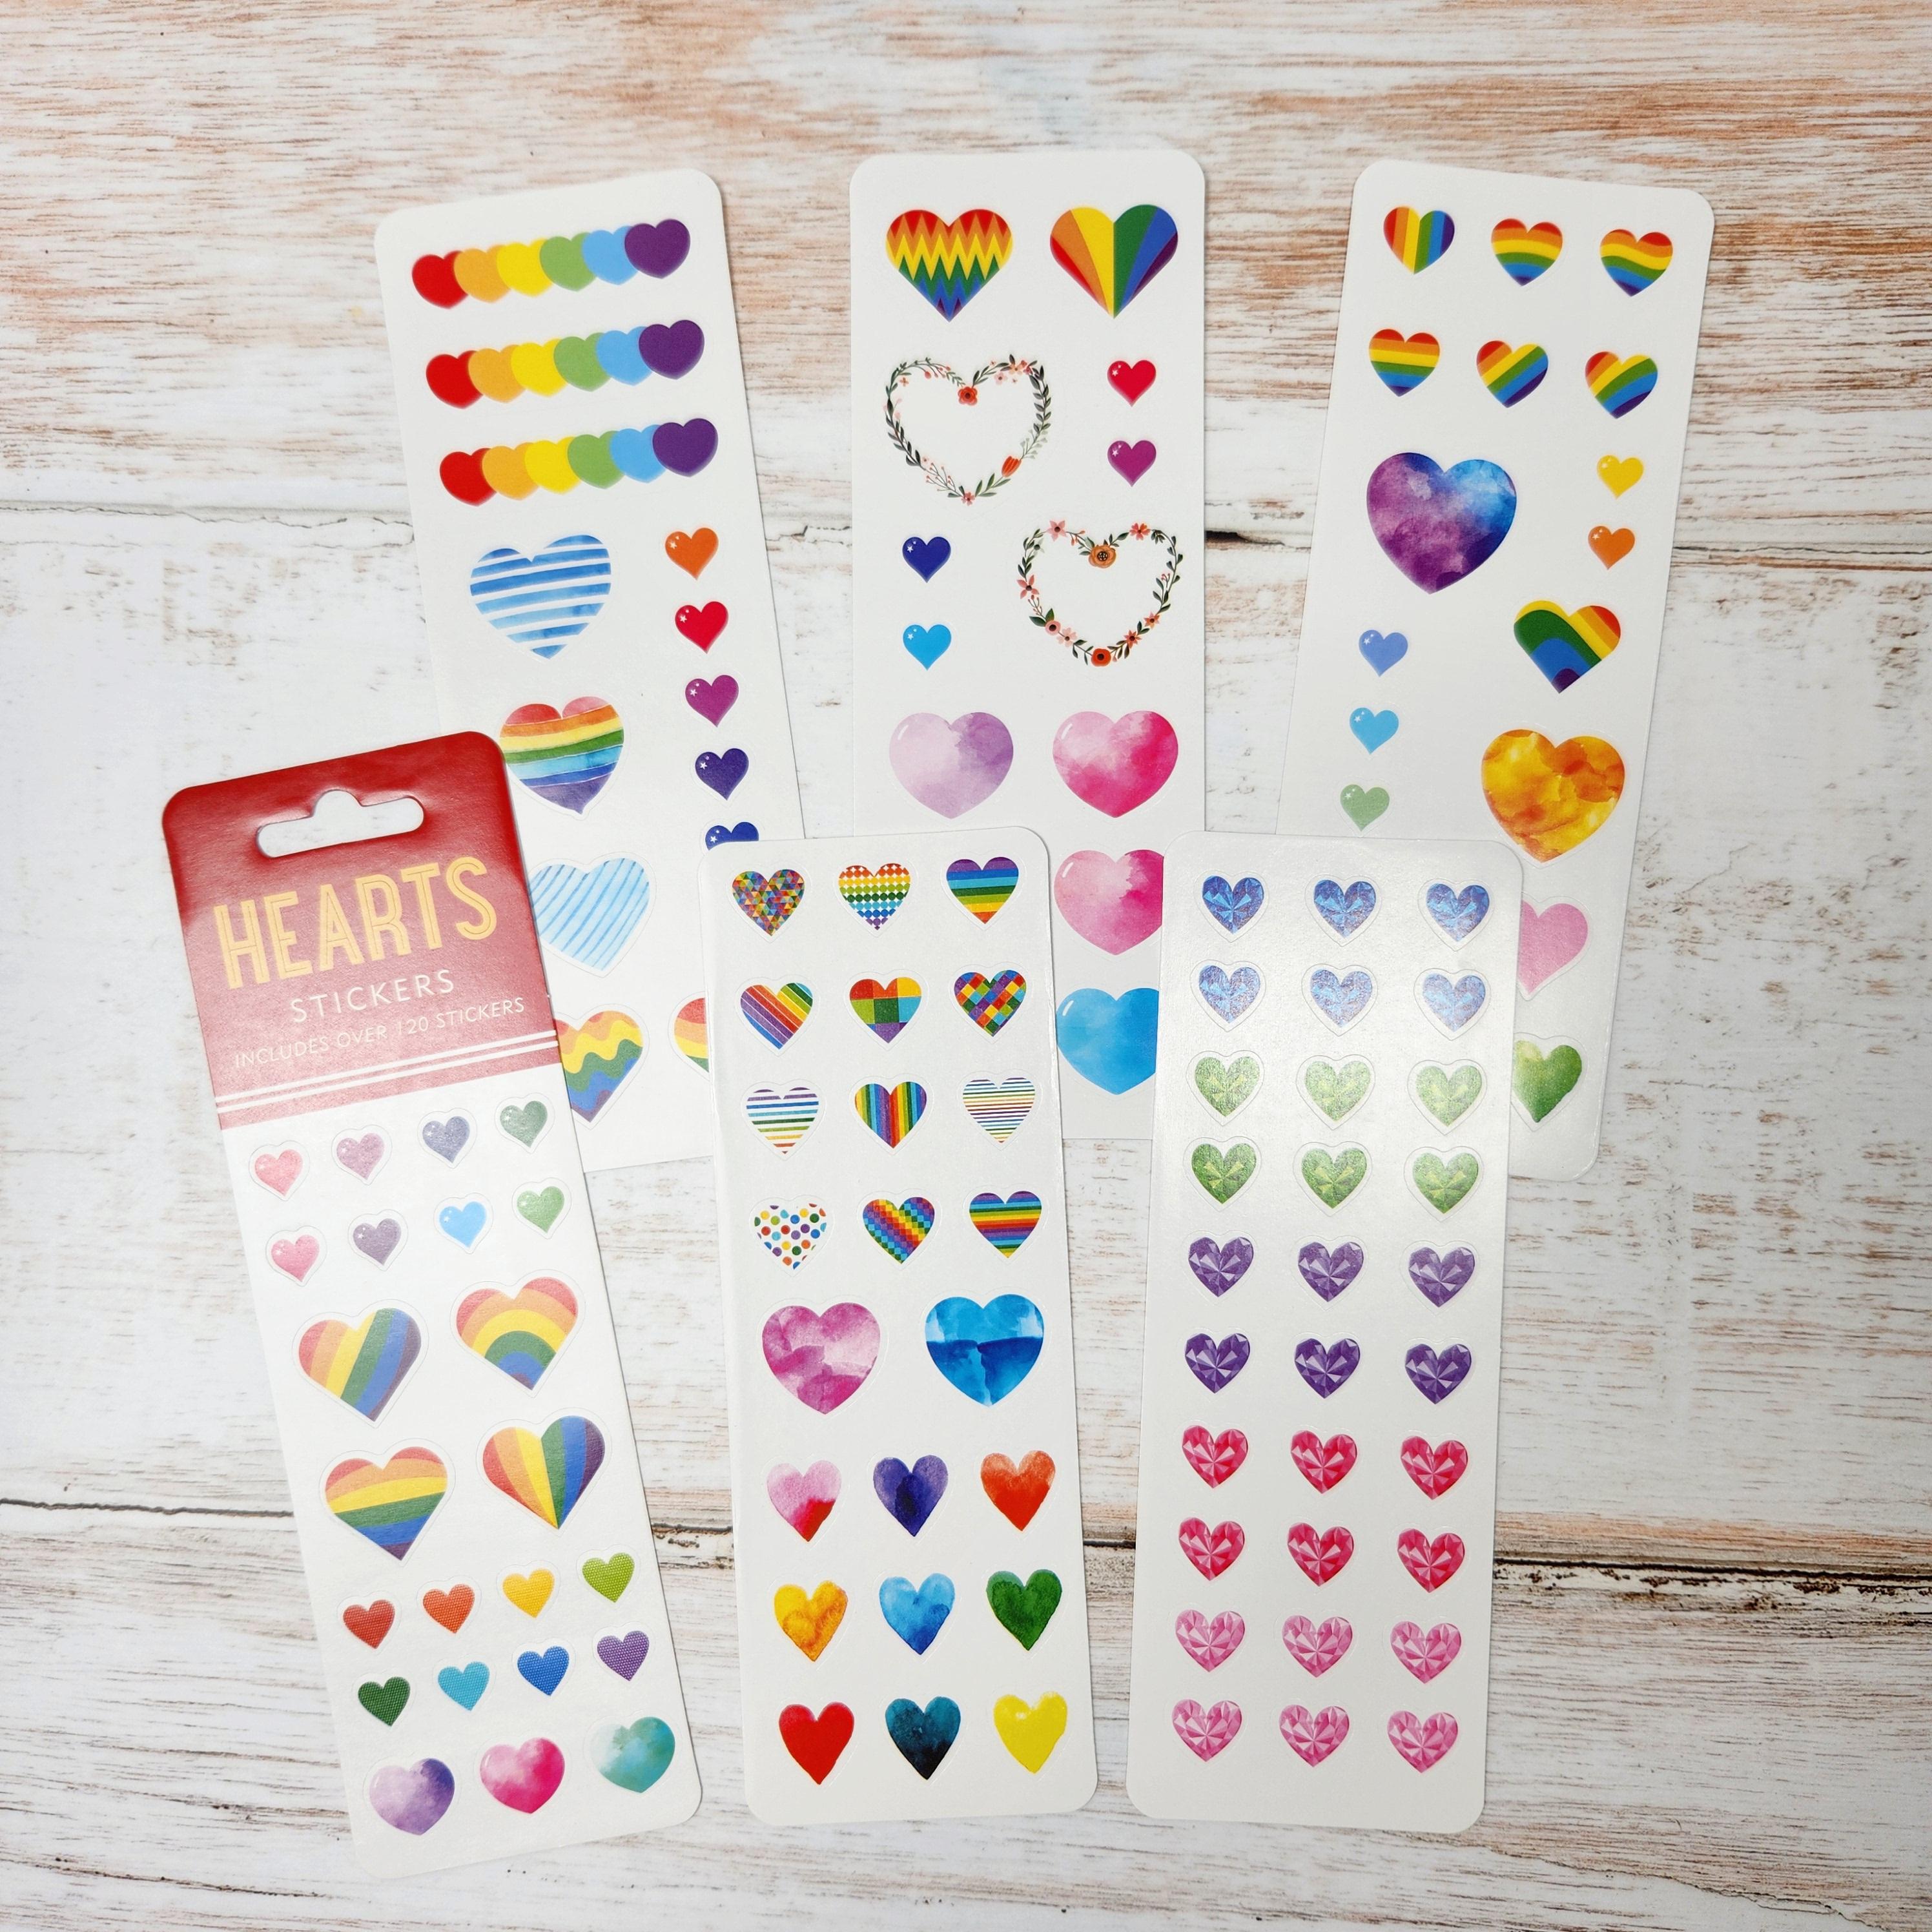 Peter Pauper Press Hearts Sticker Set 6 sheets with colourful hearts - Paper Kooka Australia